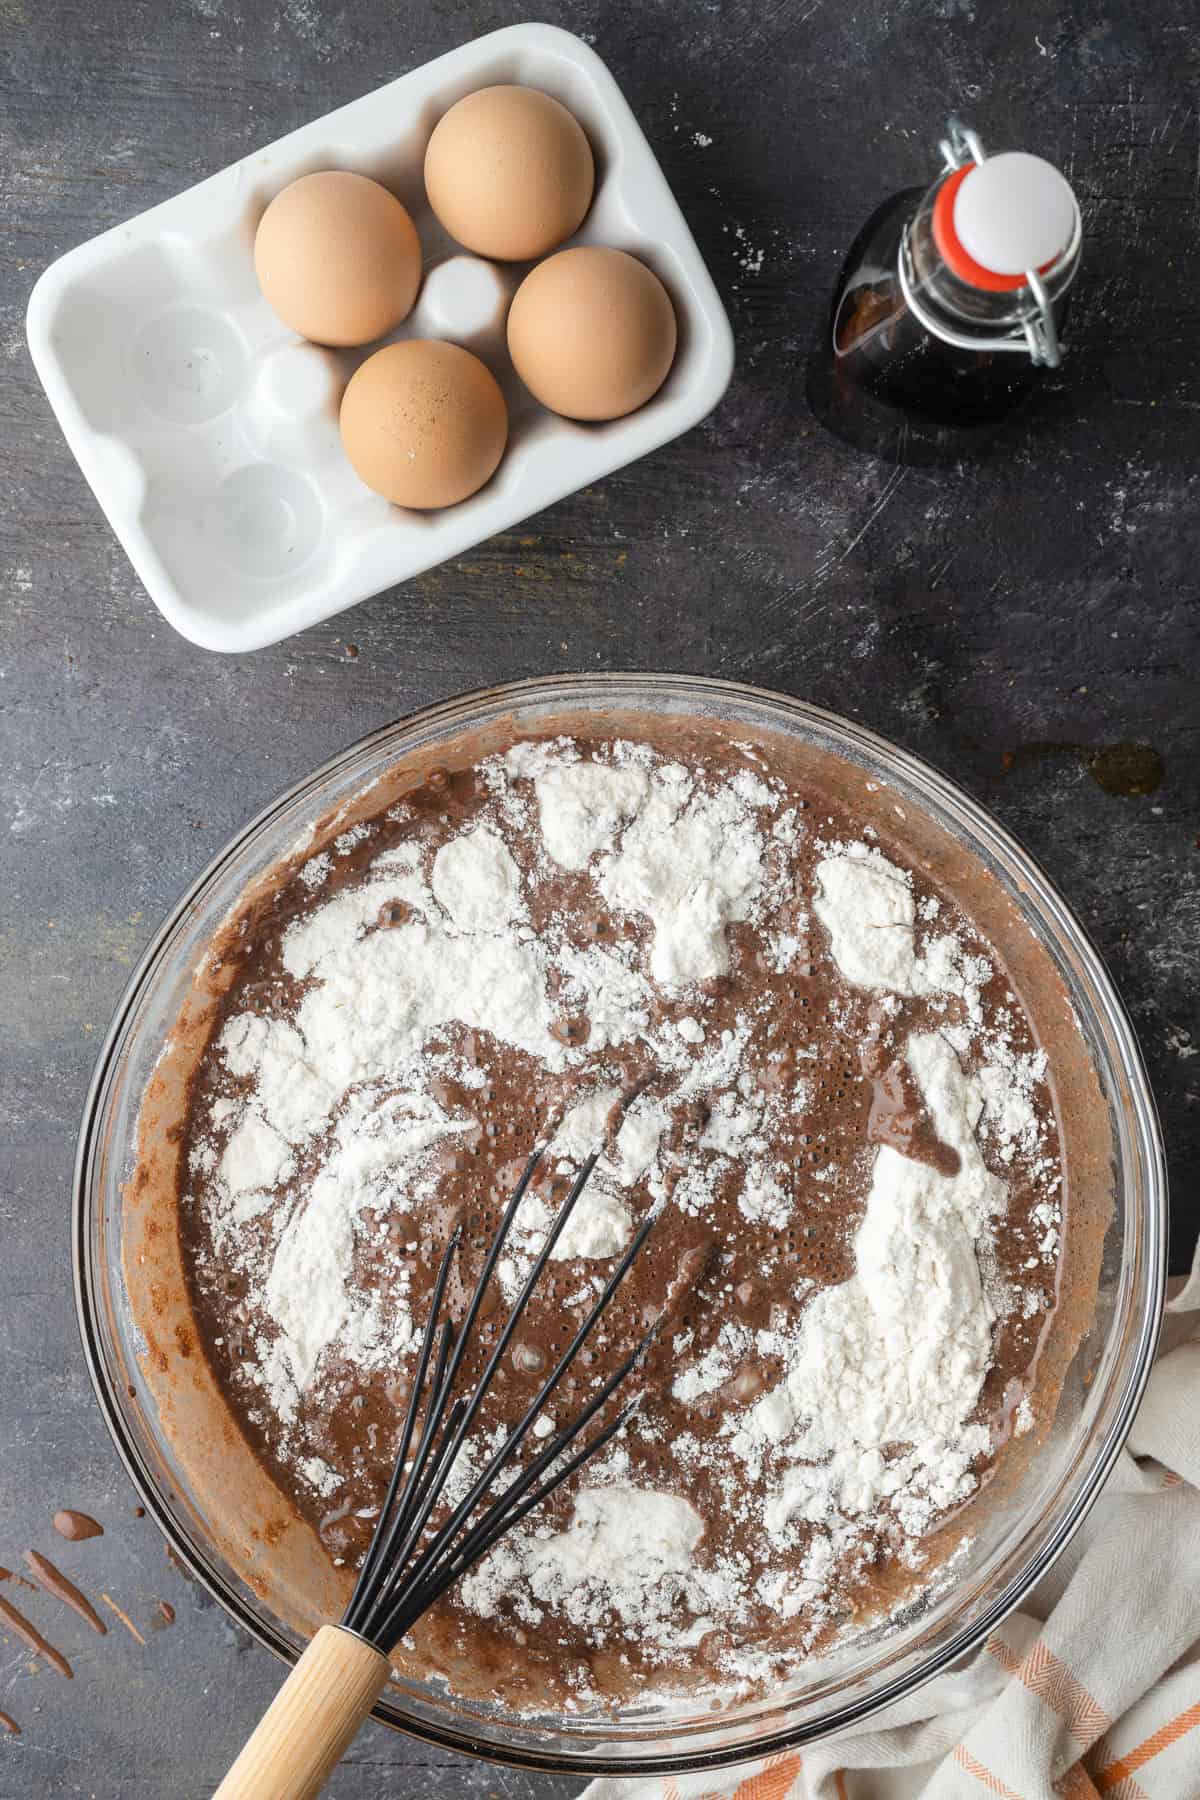 Whisking flour into chocolate cupcake batter.